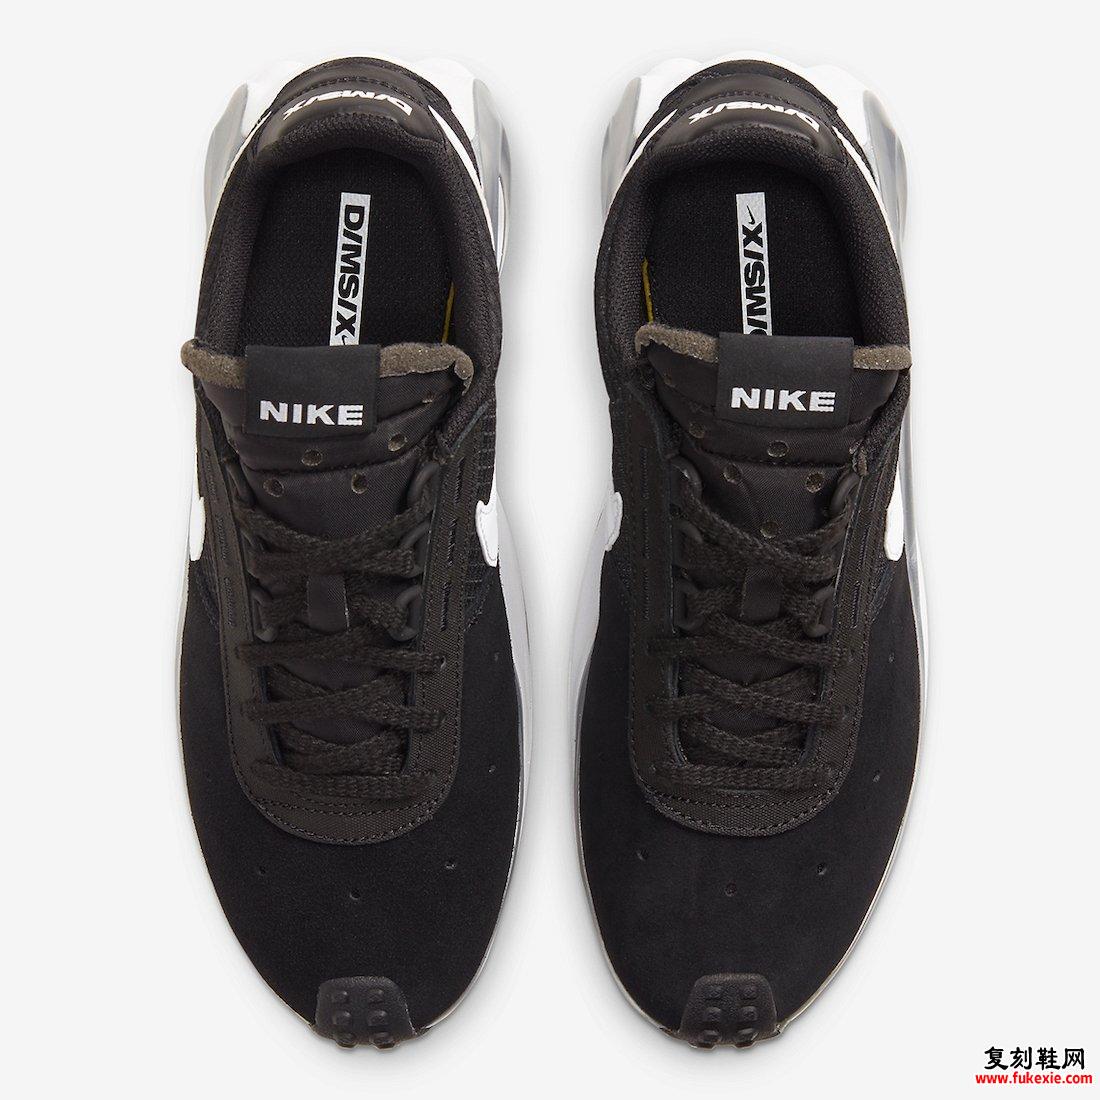 Nike D / MS / X Waffle黑色白色银色CQ0205-001发售日期信息